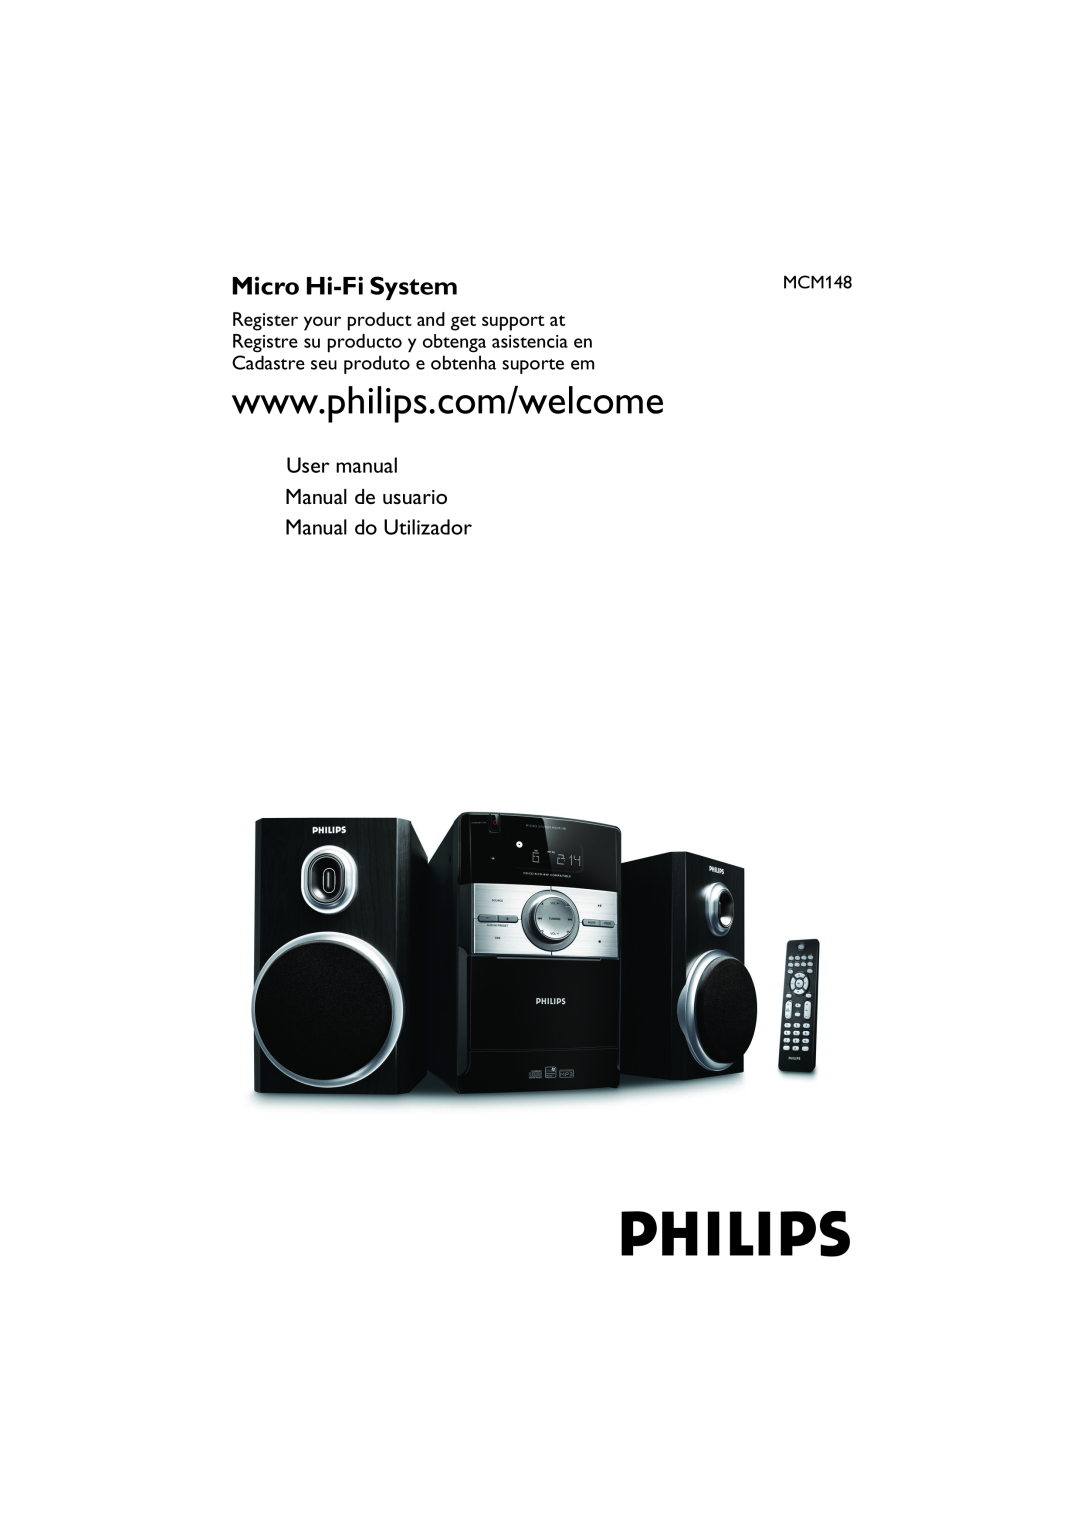 Philips MCM148 user manual Micro Hi-FiSystem, Manual do Utilizador 